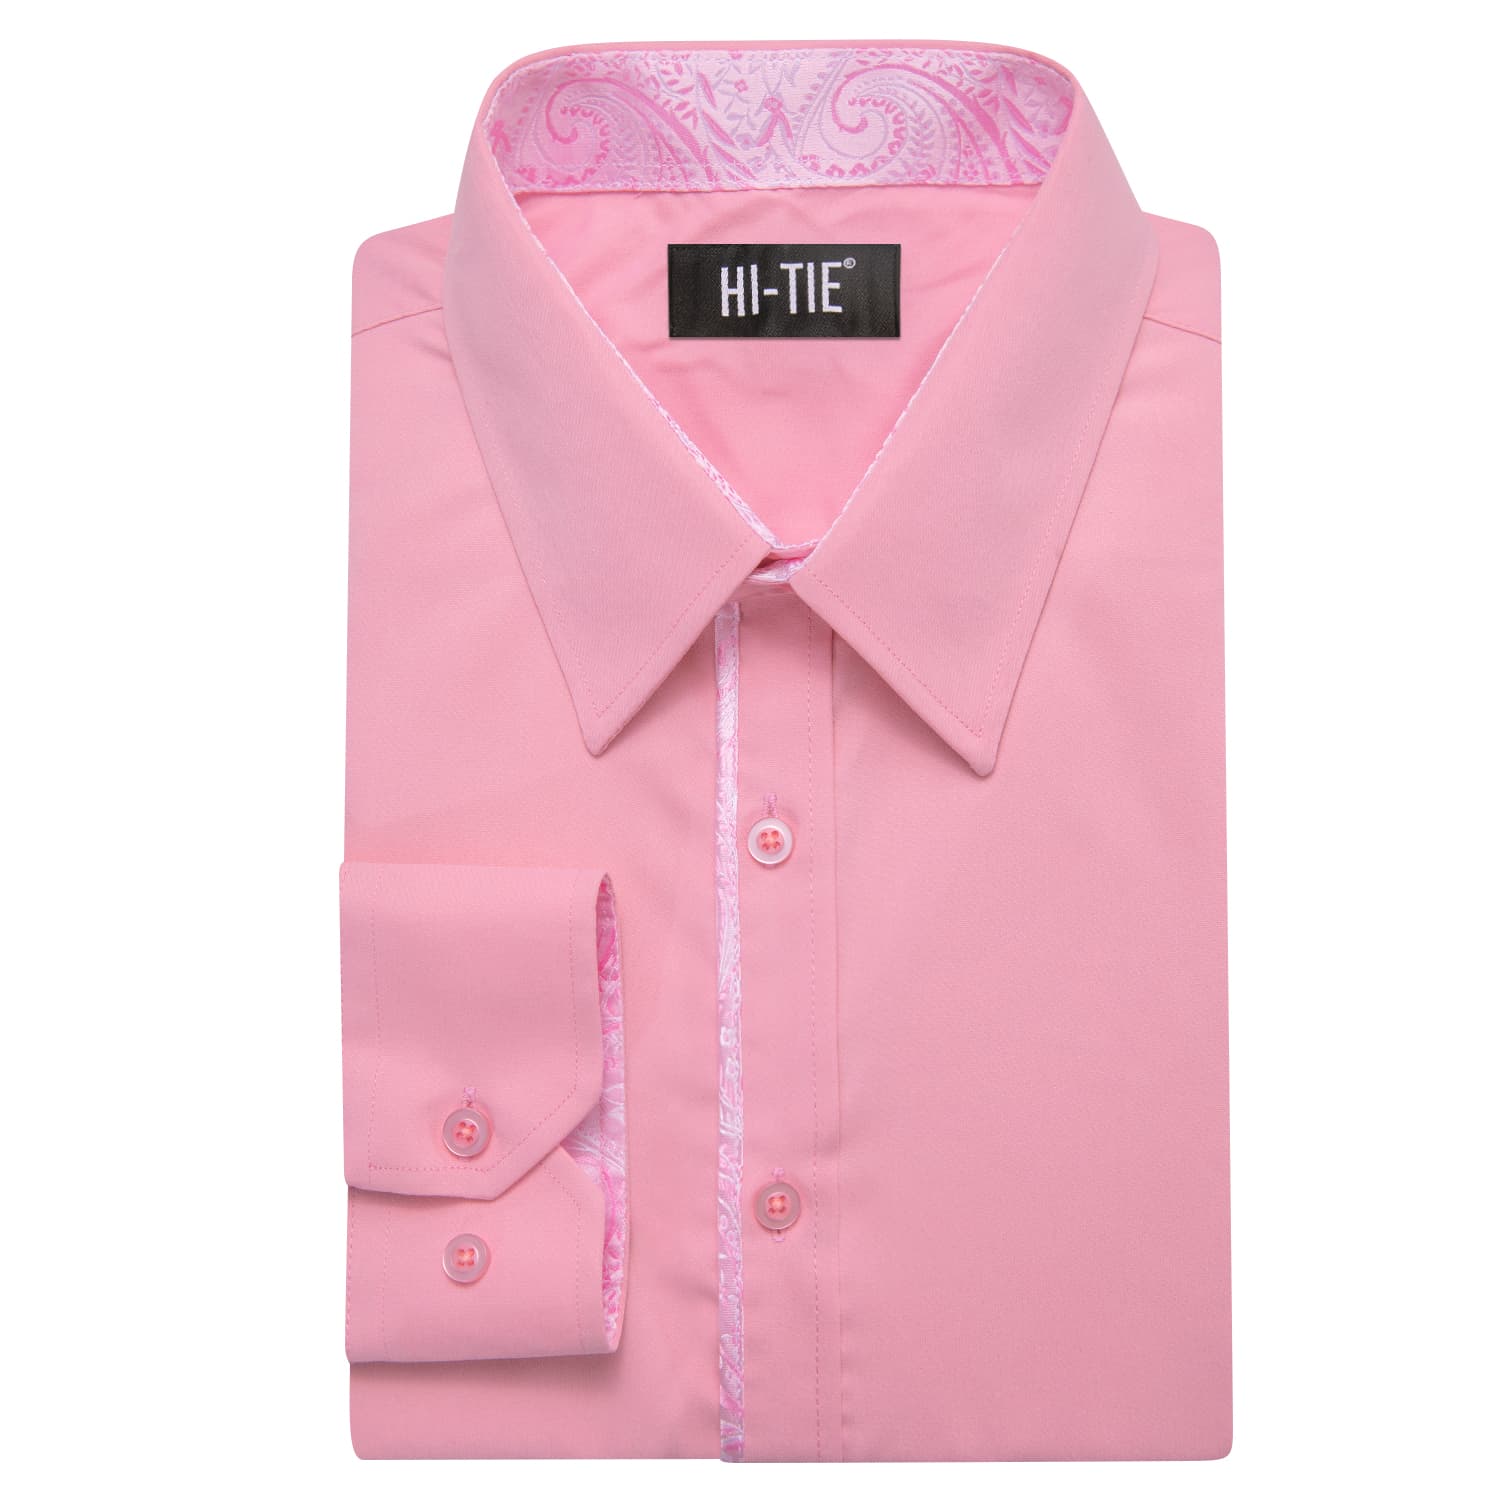 Hi-Tie Button Down Shirt Solid LightPink Shirt with Pink Jacquard Collar